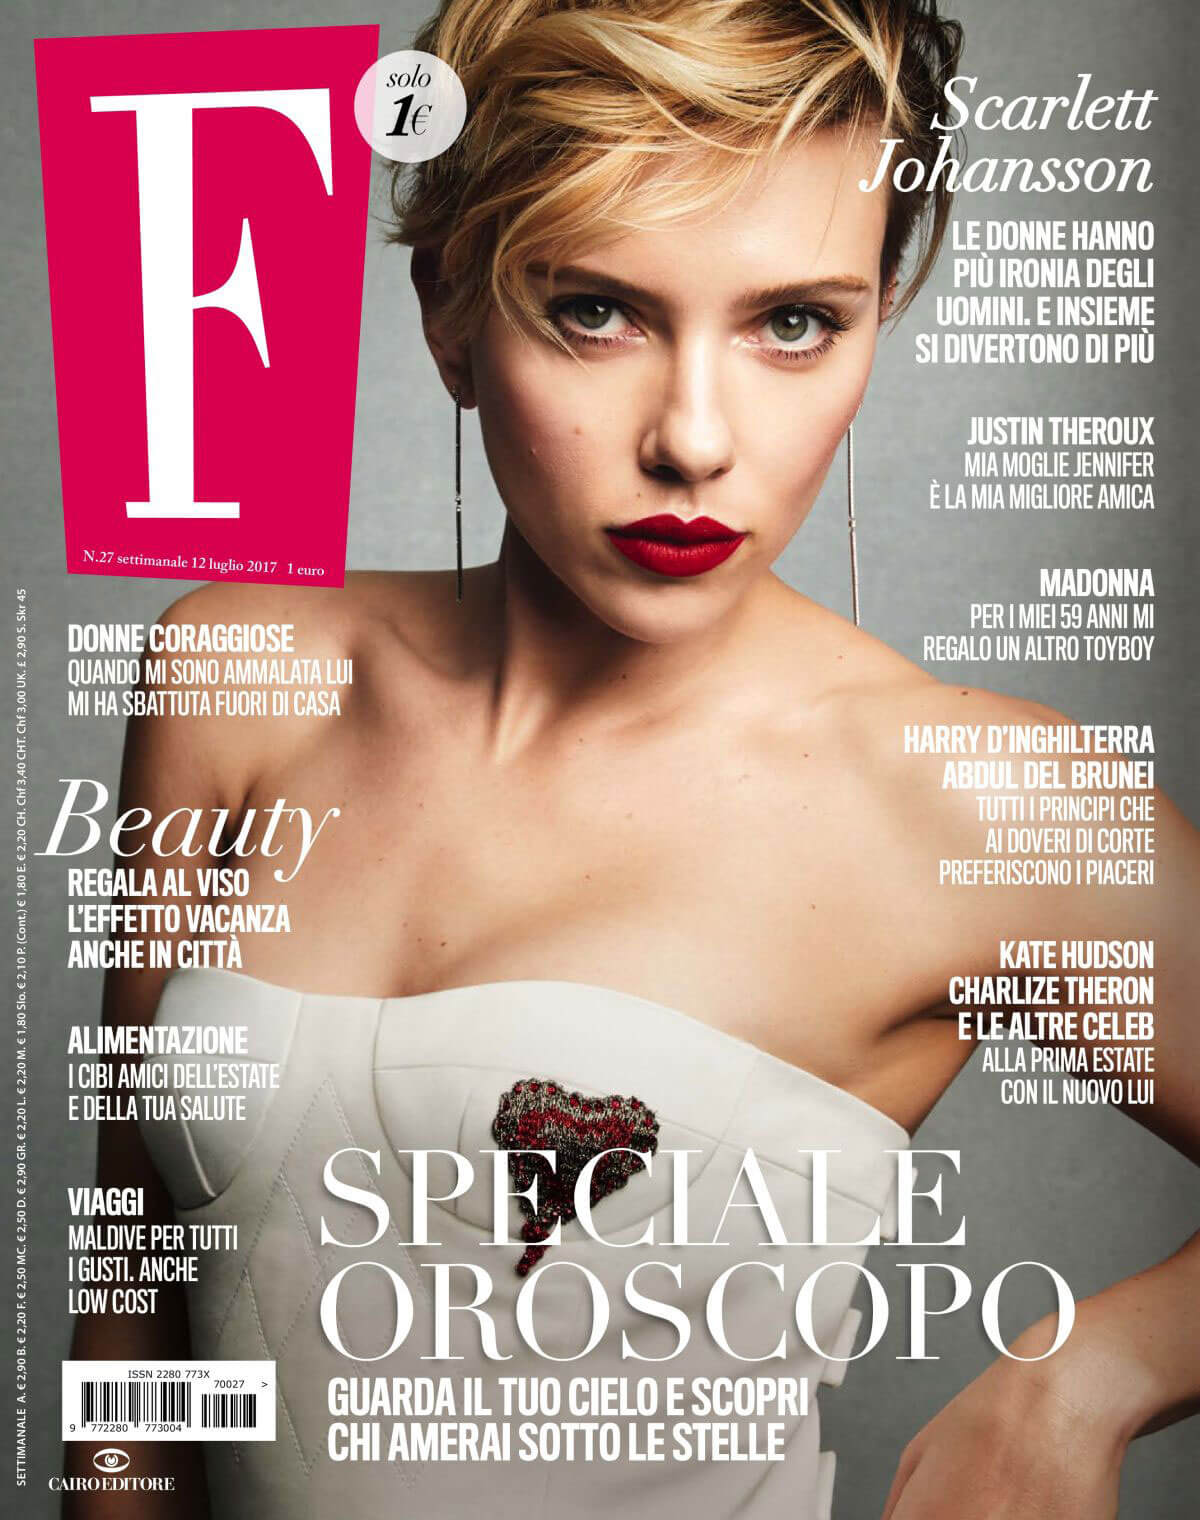 Scarlett Johansson Photoshoot in F Magazine, July 2017